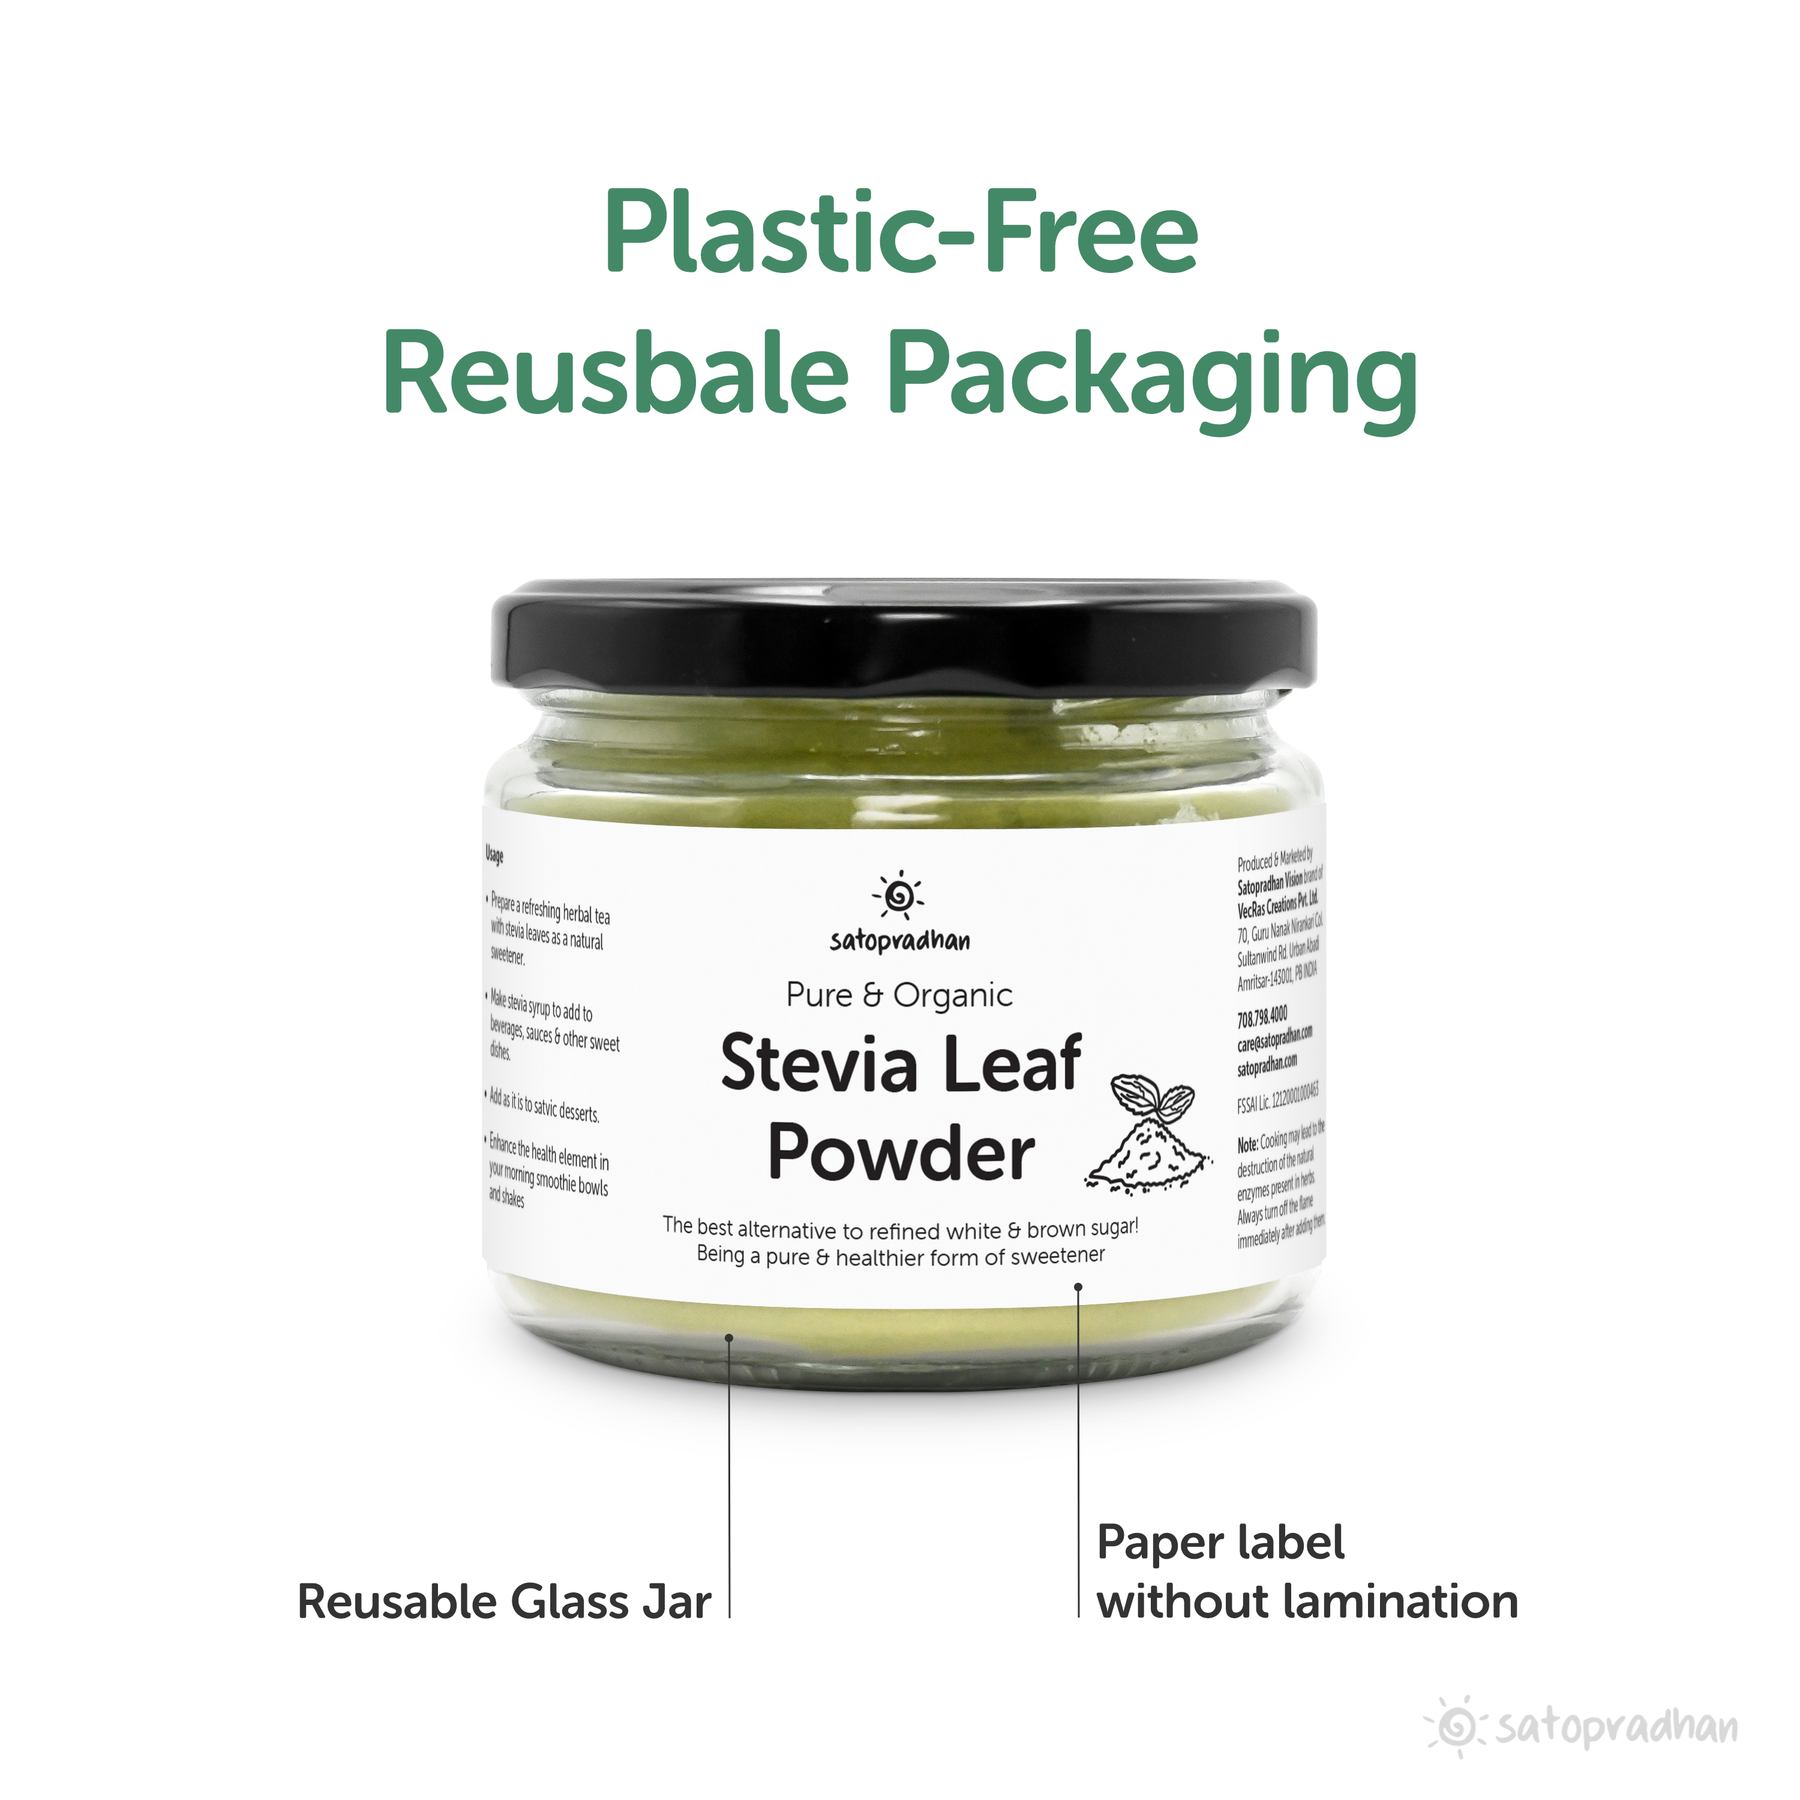 Stevia Leaf Powder-Pure, Organic & Natural, 100g - Zero-Calorie Natural Sweetener - Diabetic friendly & Chemical-free